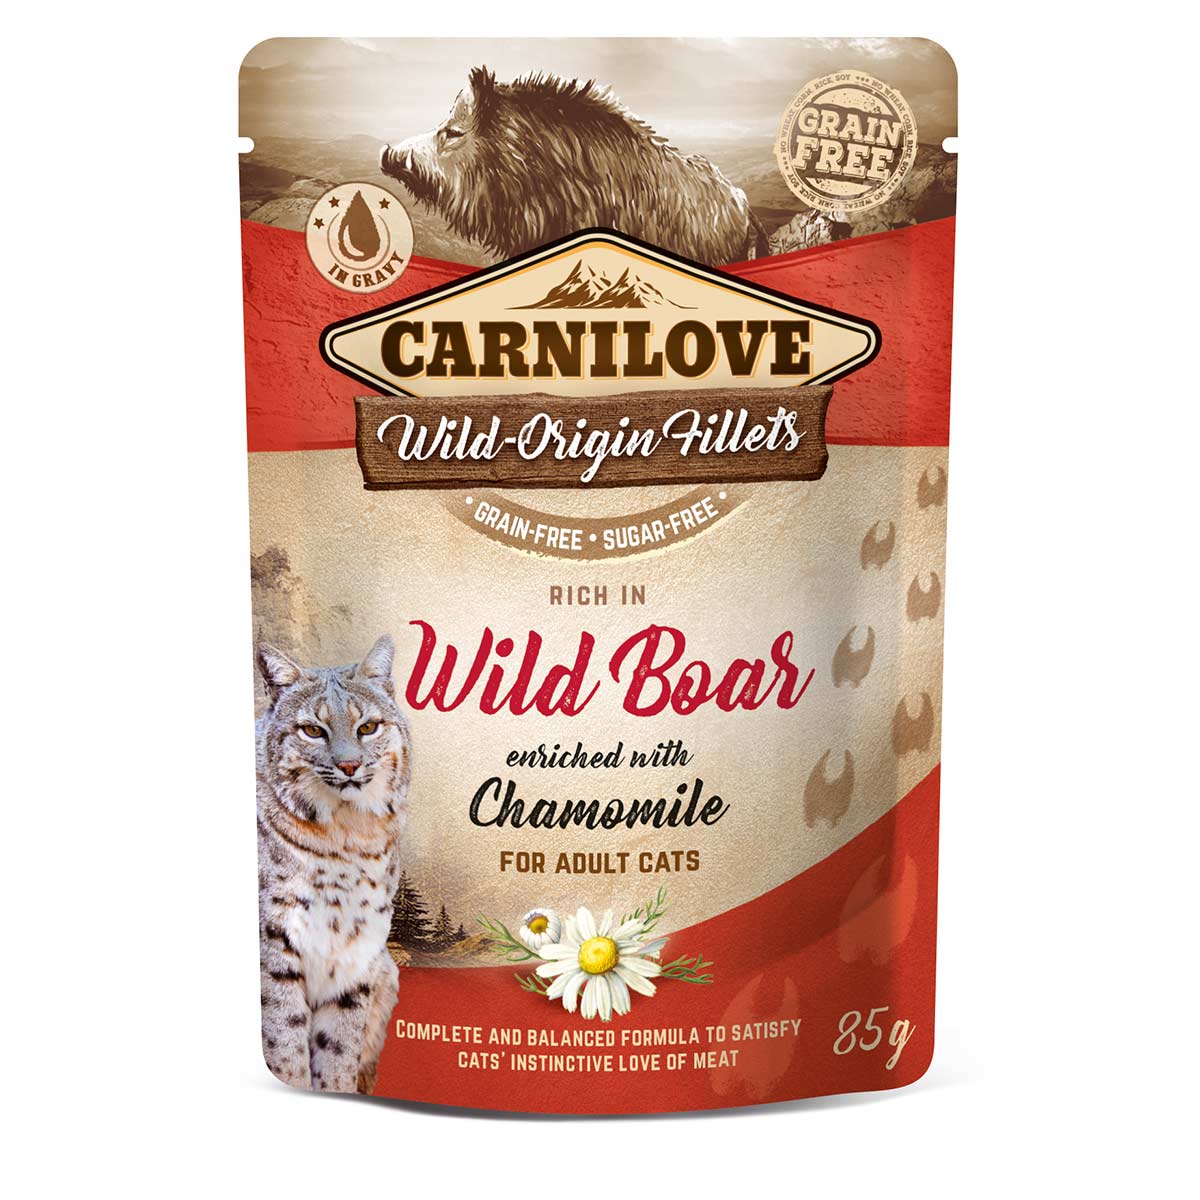 Carnilove Cat Pouch Ragout - Wild Boar enriched with Chamomile 24x85g von Carnilove